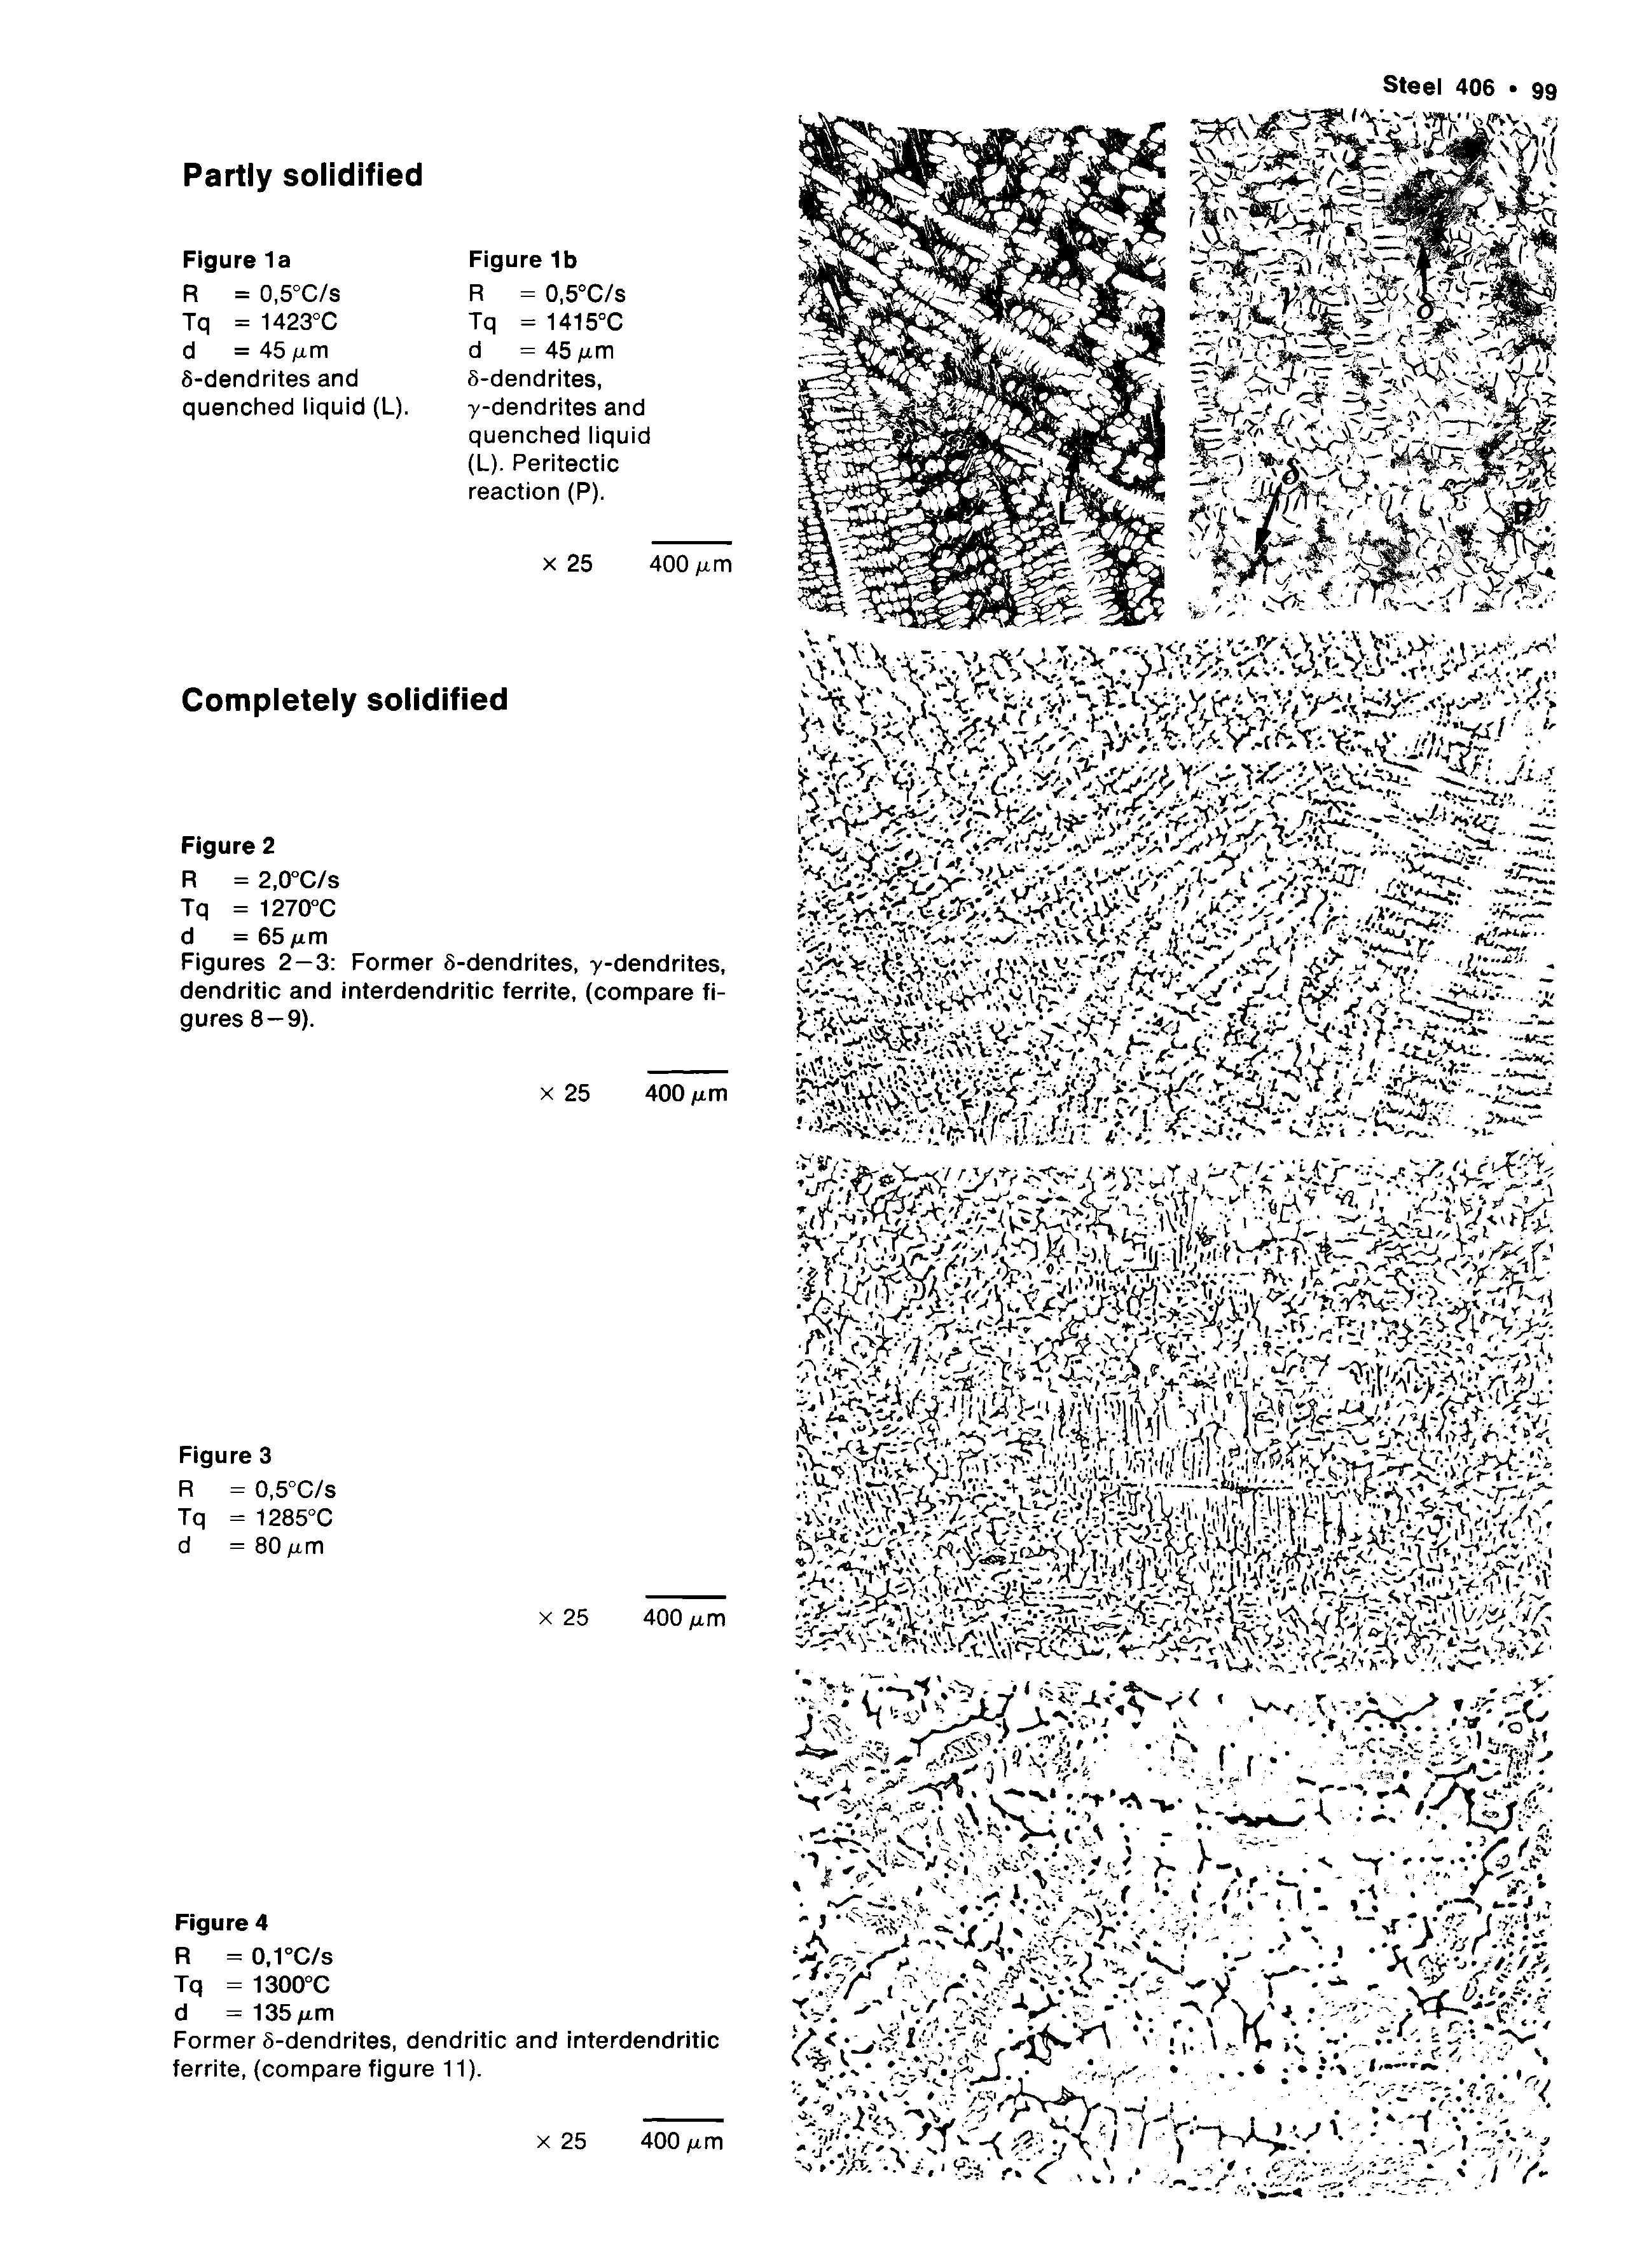 Figures 2—3 Former 8-dendrites, y-dendrites, dendritic and interdendritic ferrite, (compare figures 8 — 9).